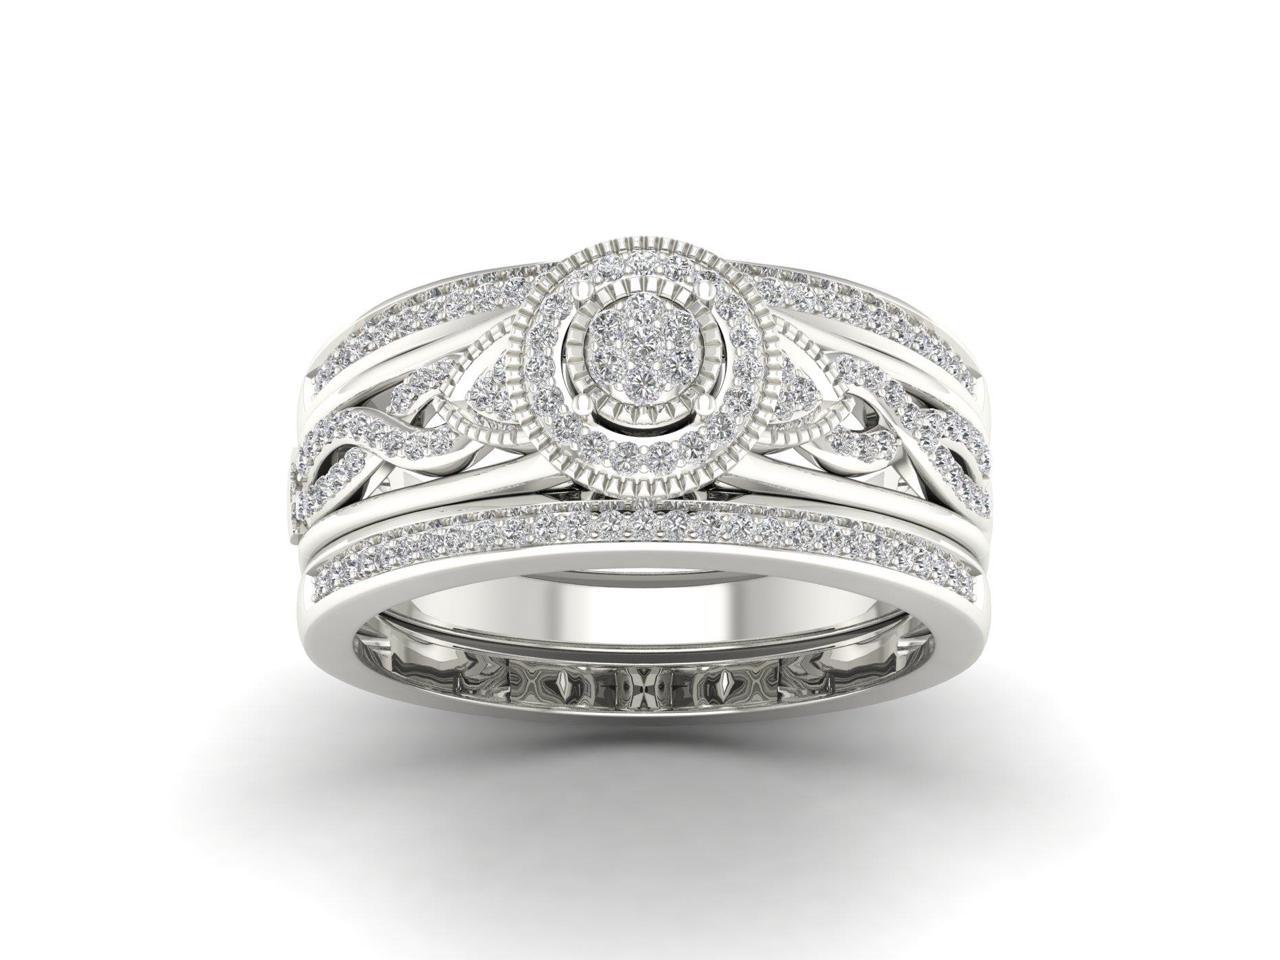 Halo Bridal Ring Set with 3/8ct TDW Natural Round Cut Diamonds